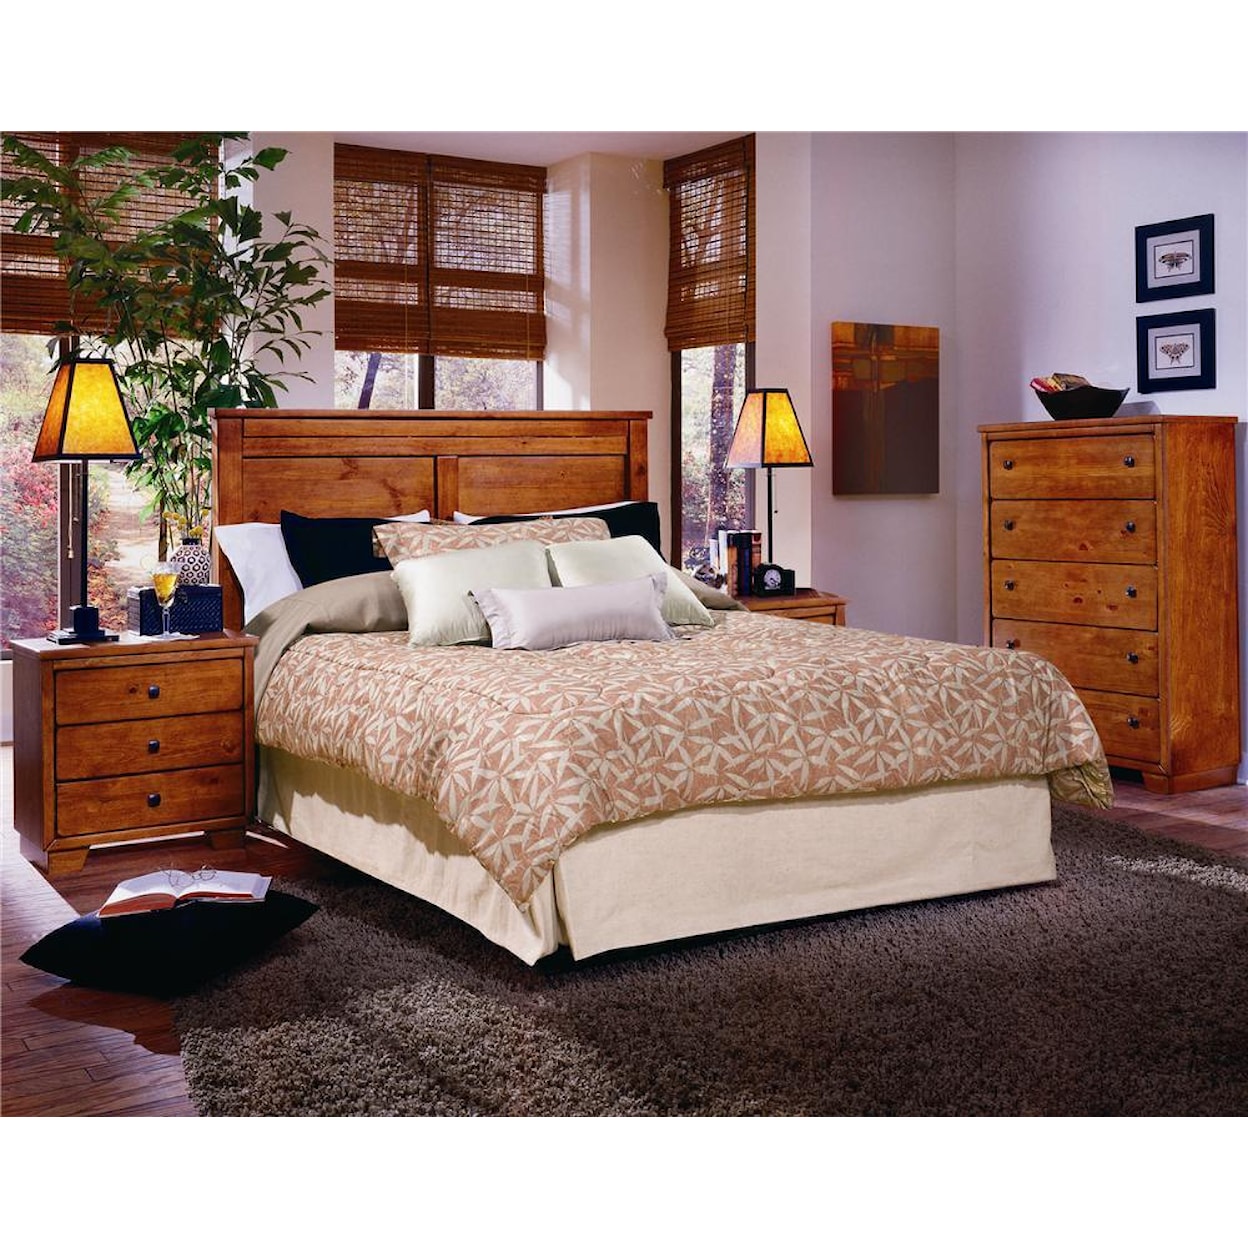 Progressive Furniture Diego King Bedroom Gtroup